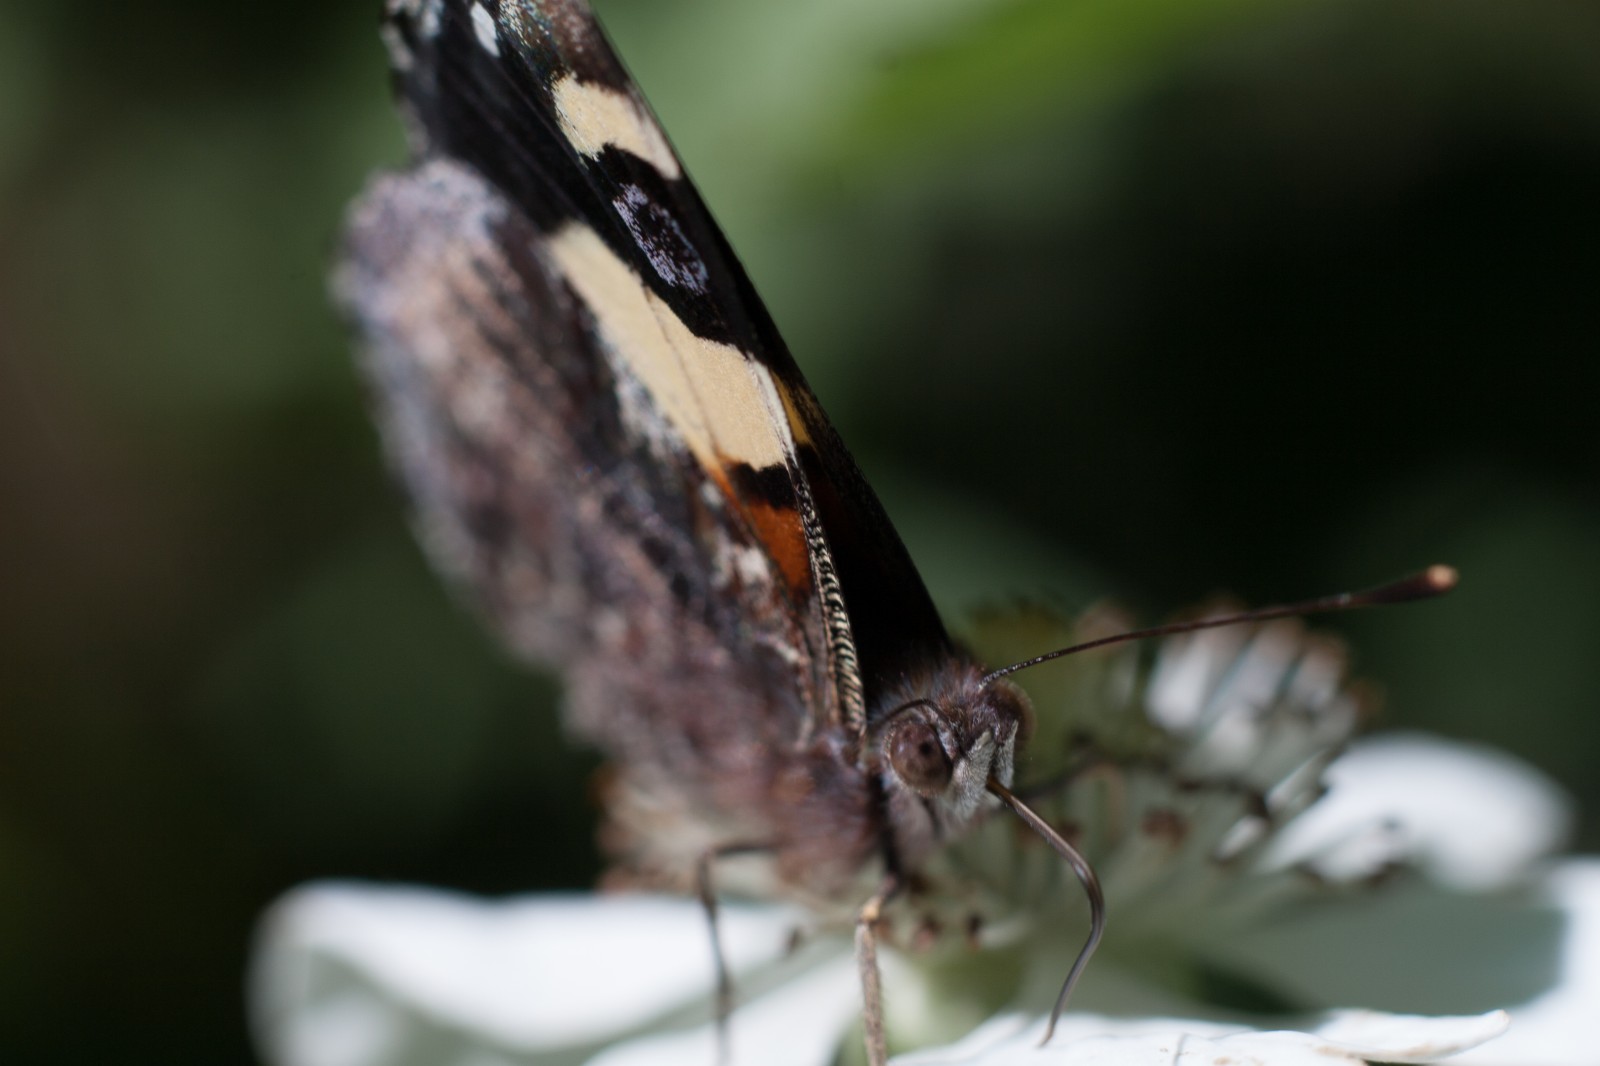 closeup of a butterfly